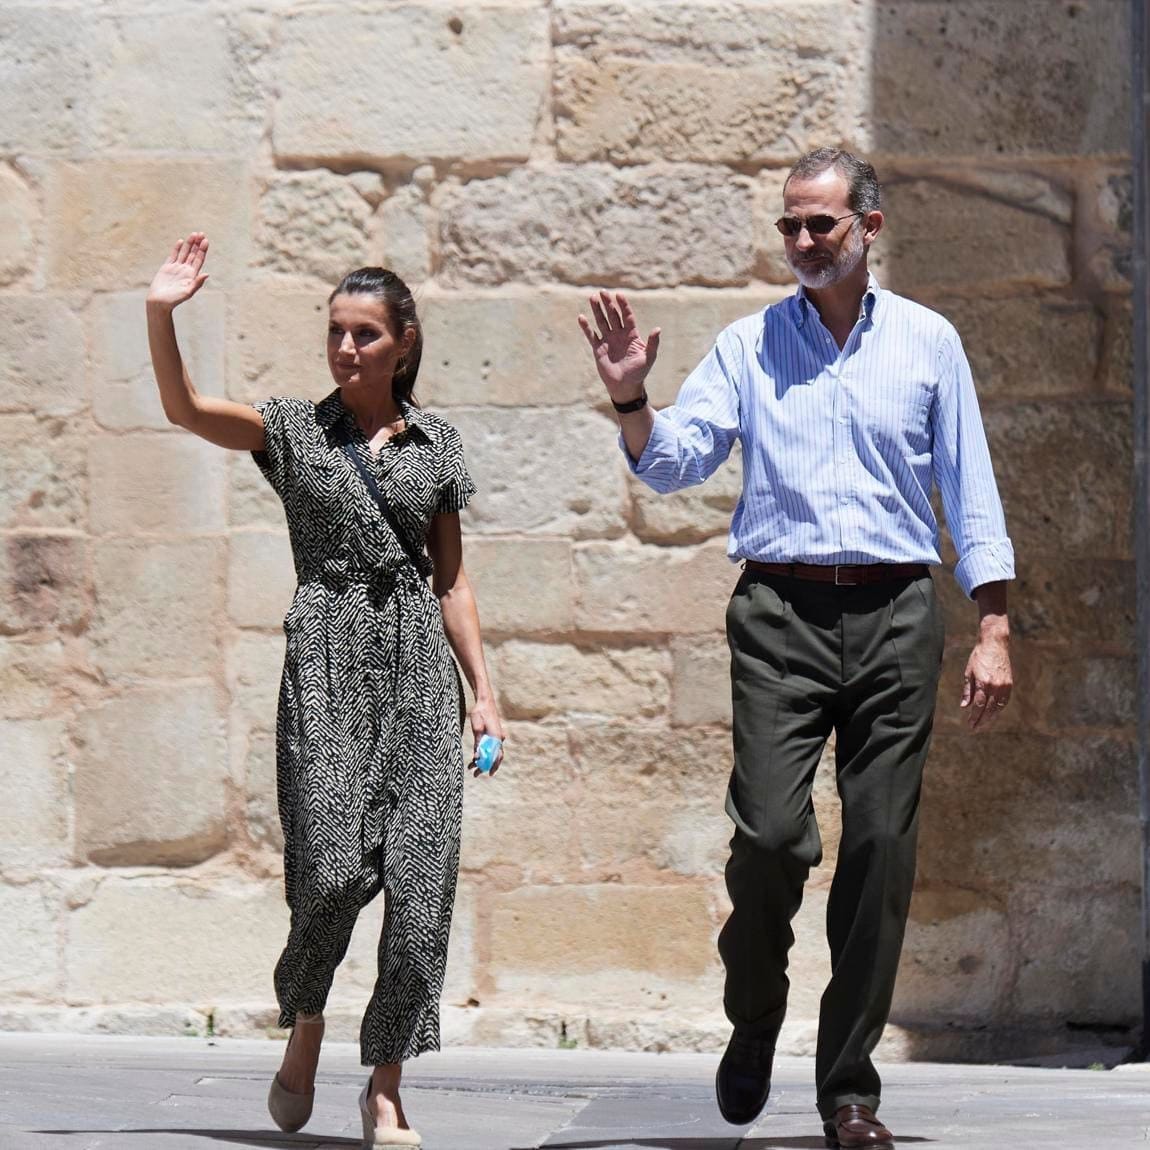 The royal couple is visiting autonomous communities in Spain